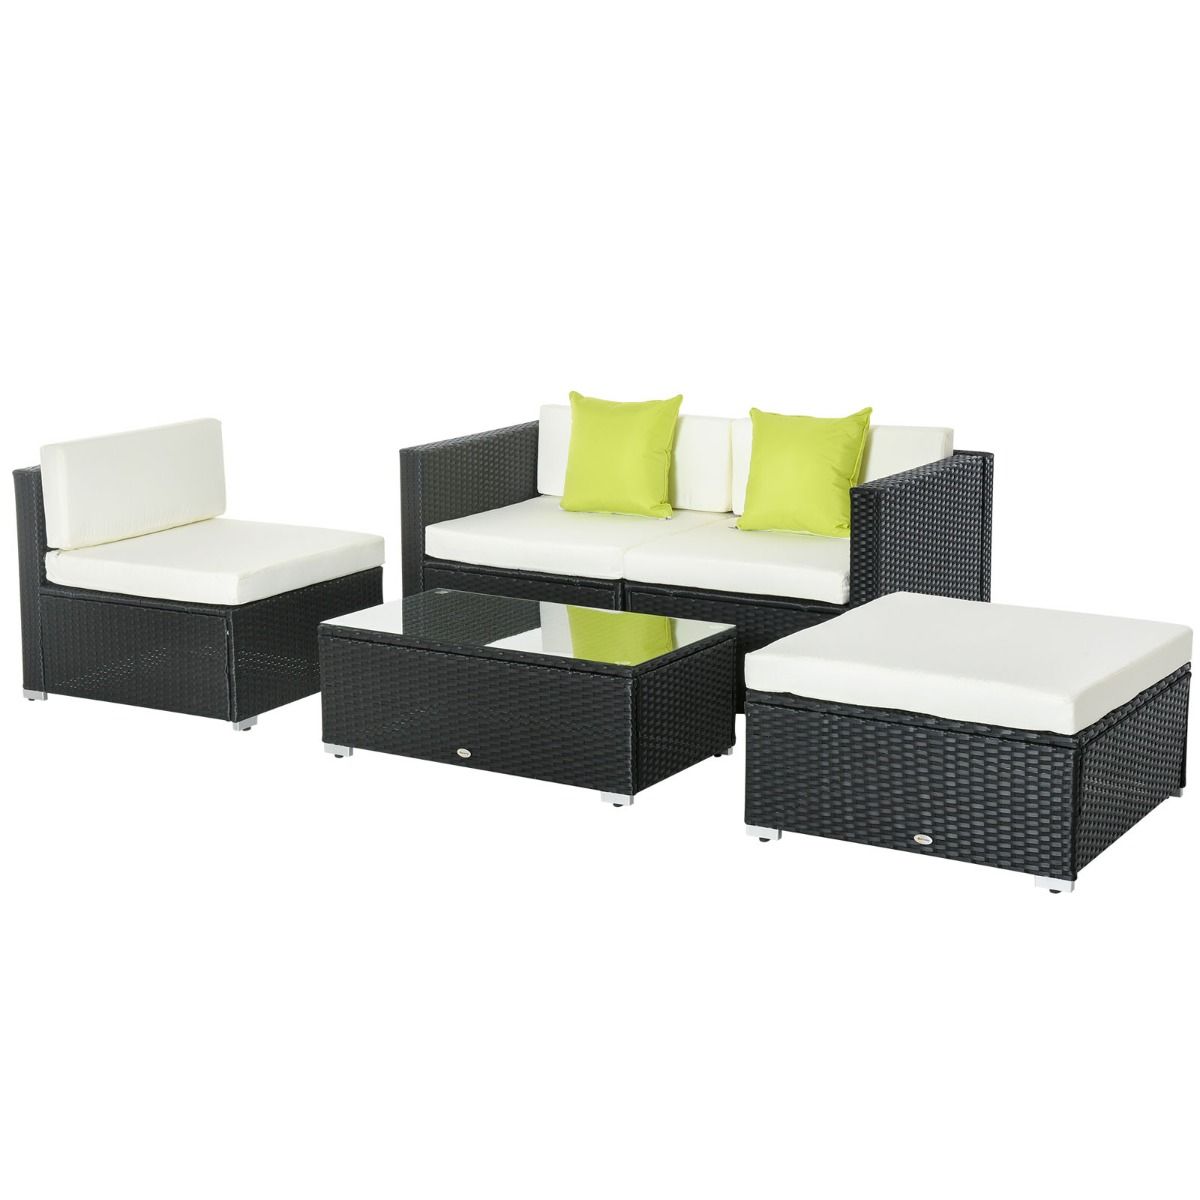 Outsunny Rattan Garden Sectional Sofa Set, Black - 4 Seater